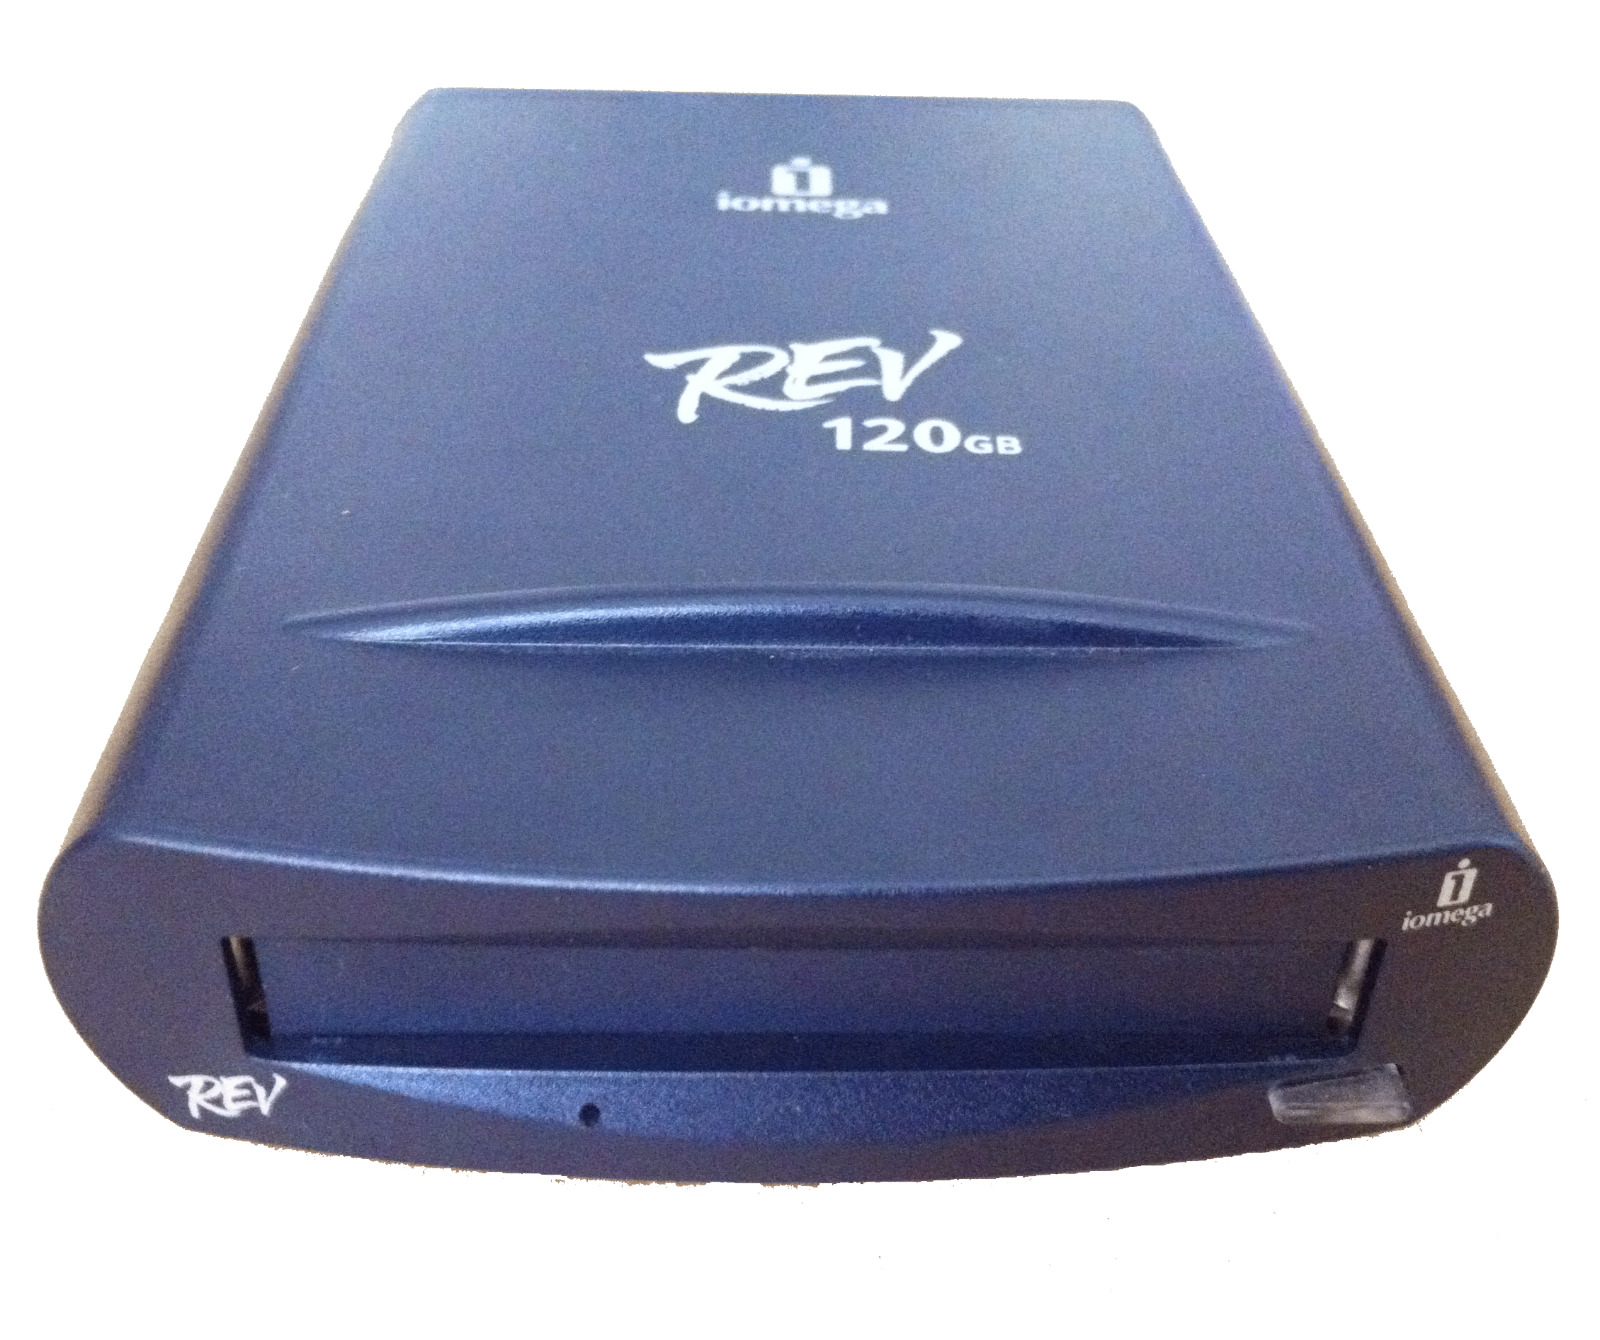 Iomega Rev 120GB USB Drive #180